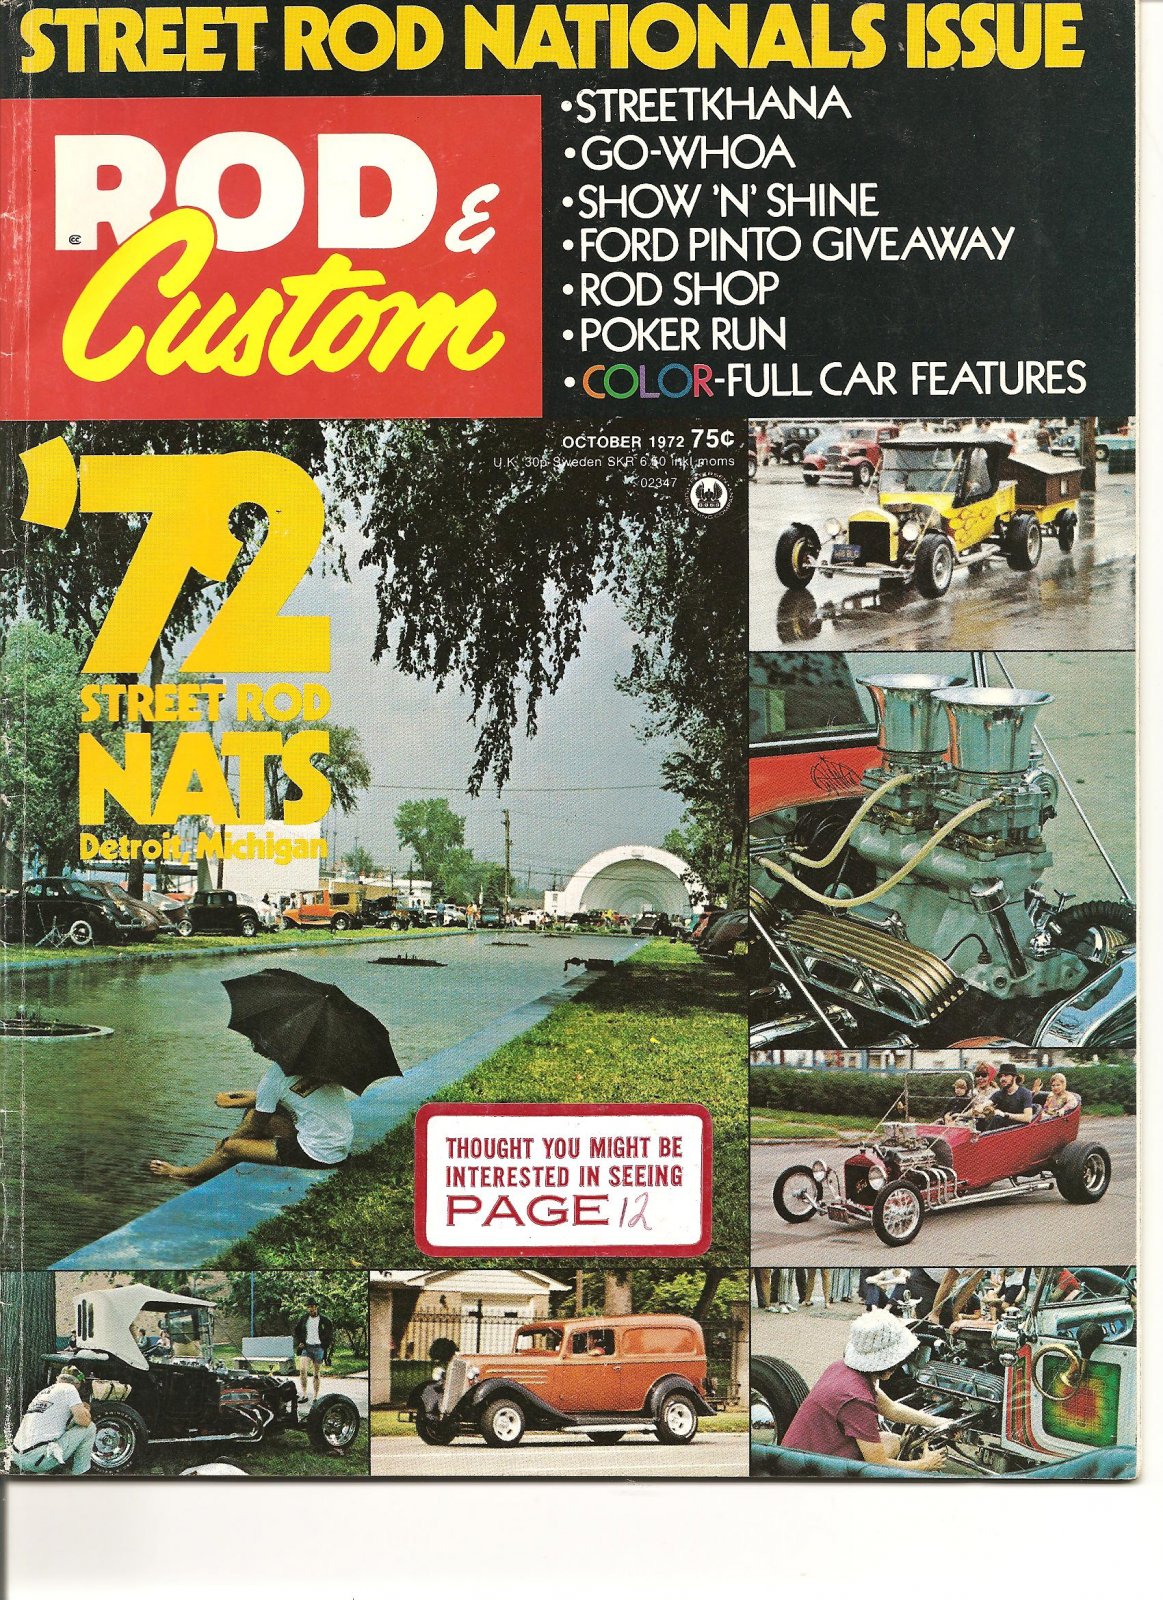 Rod & Custom editor Bud Bryan trip to Detroit Nats 1972 001.jpg